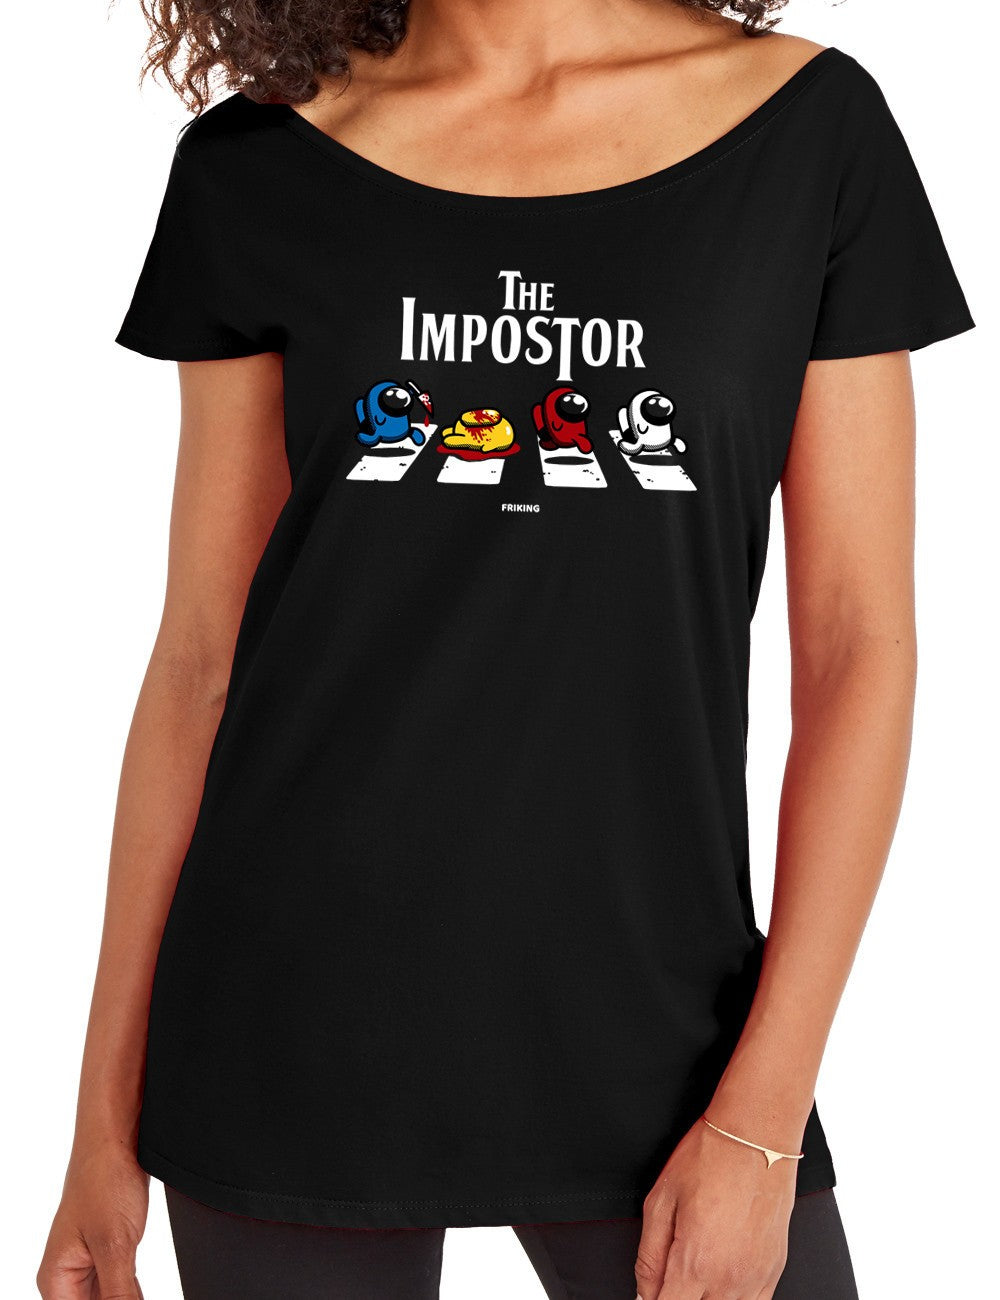  The Impostor